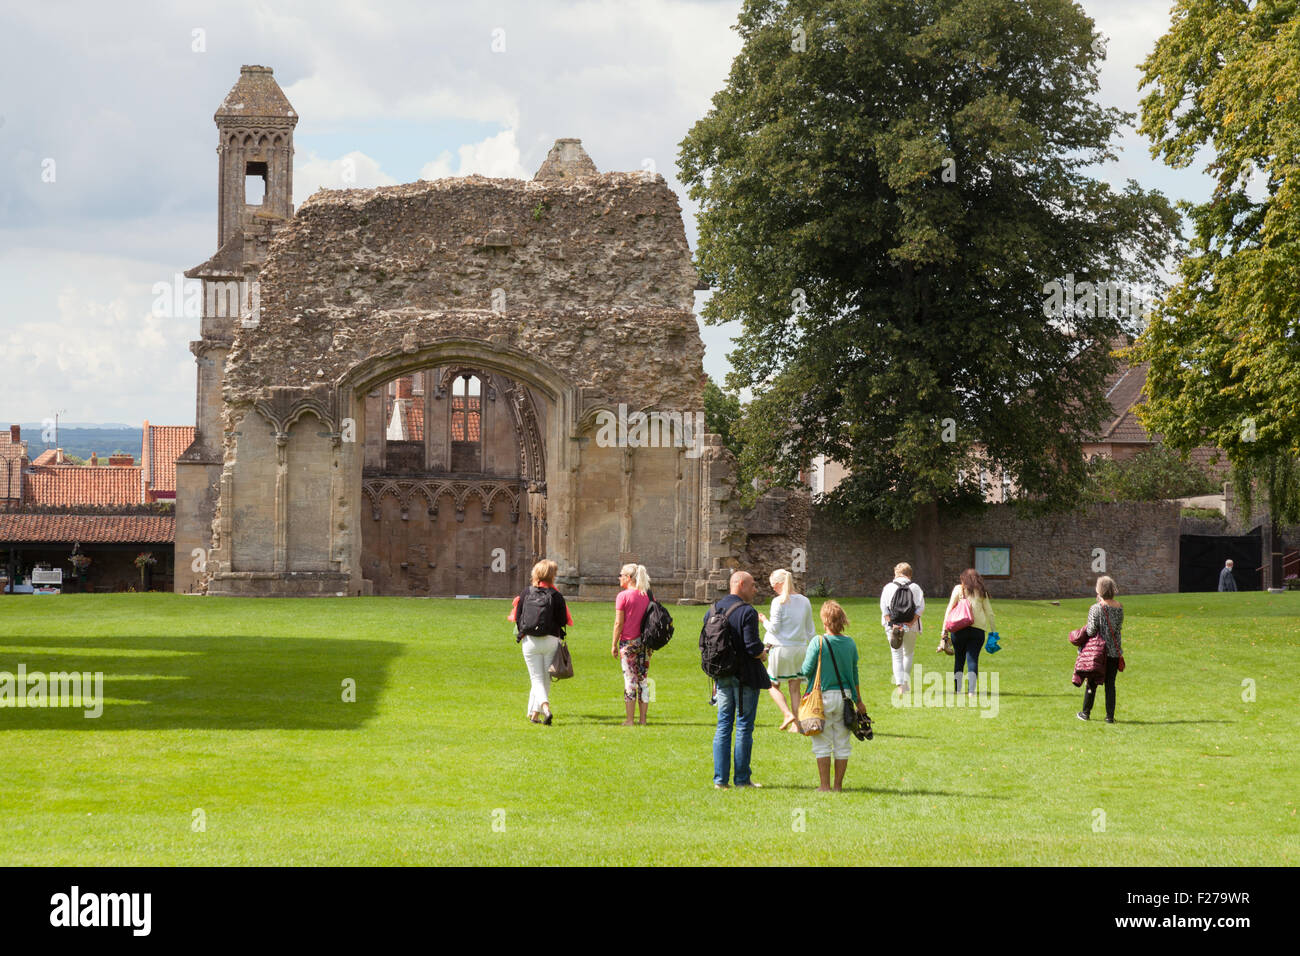 Tourists visiting the ruins of 13th century medieval Glastonbury Abbey, Glastonbury, Somerset England UK Stock Photo